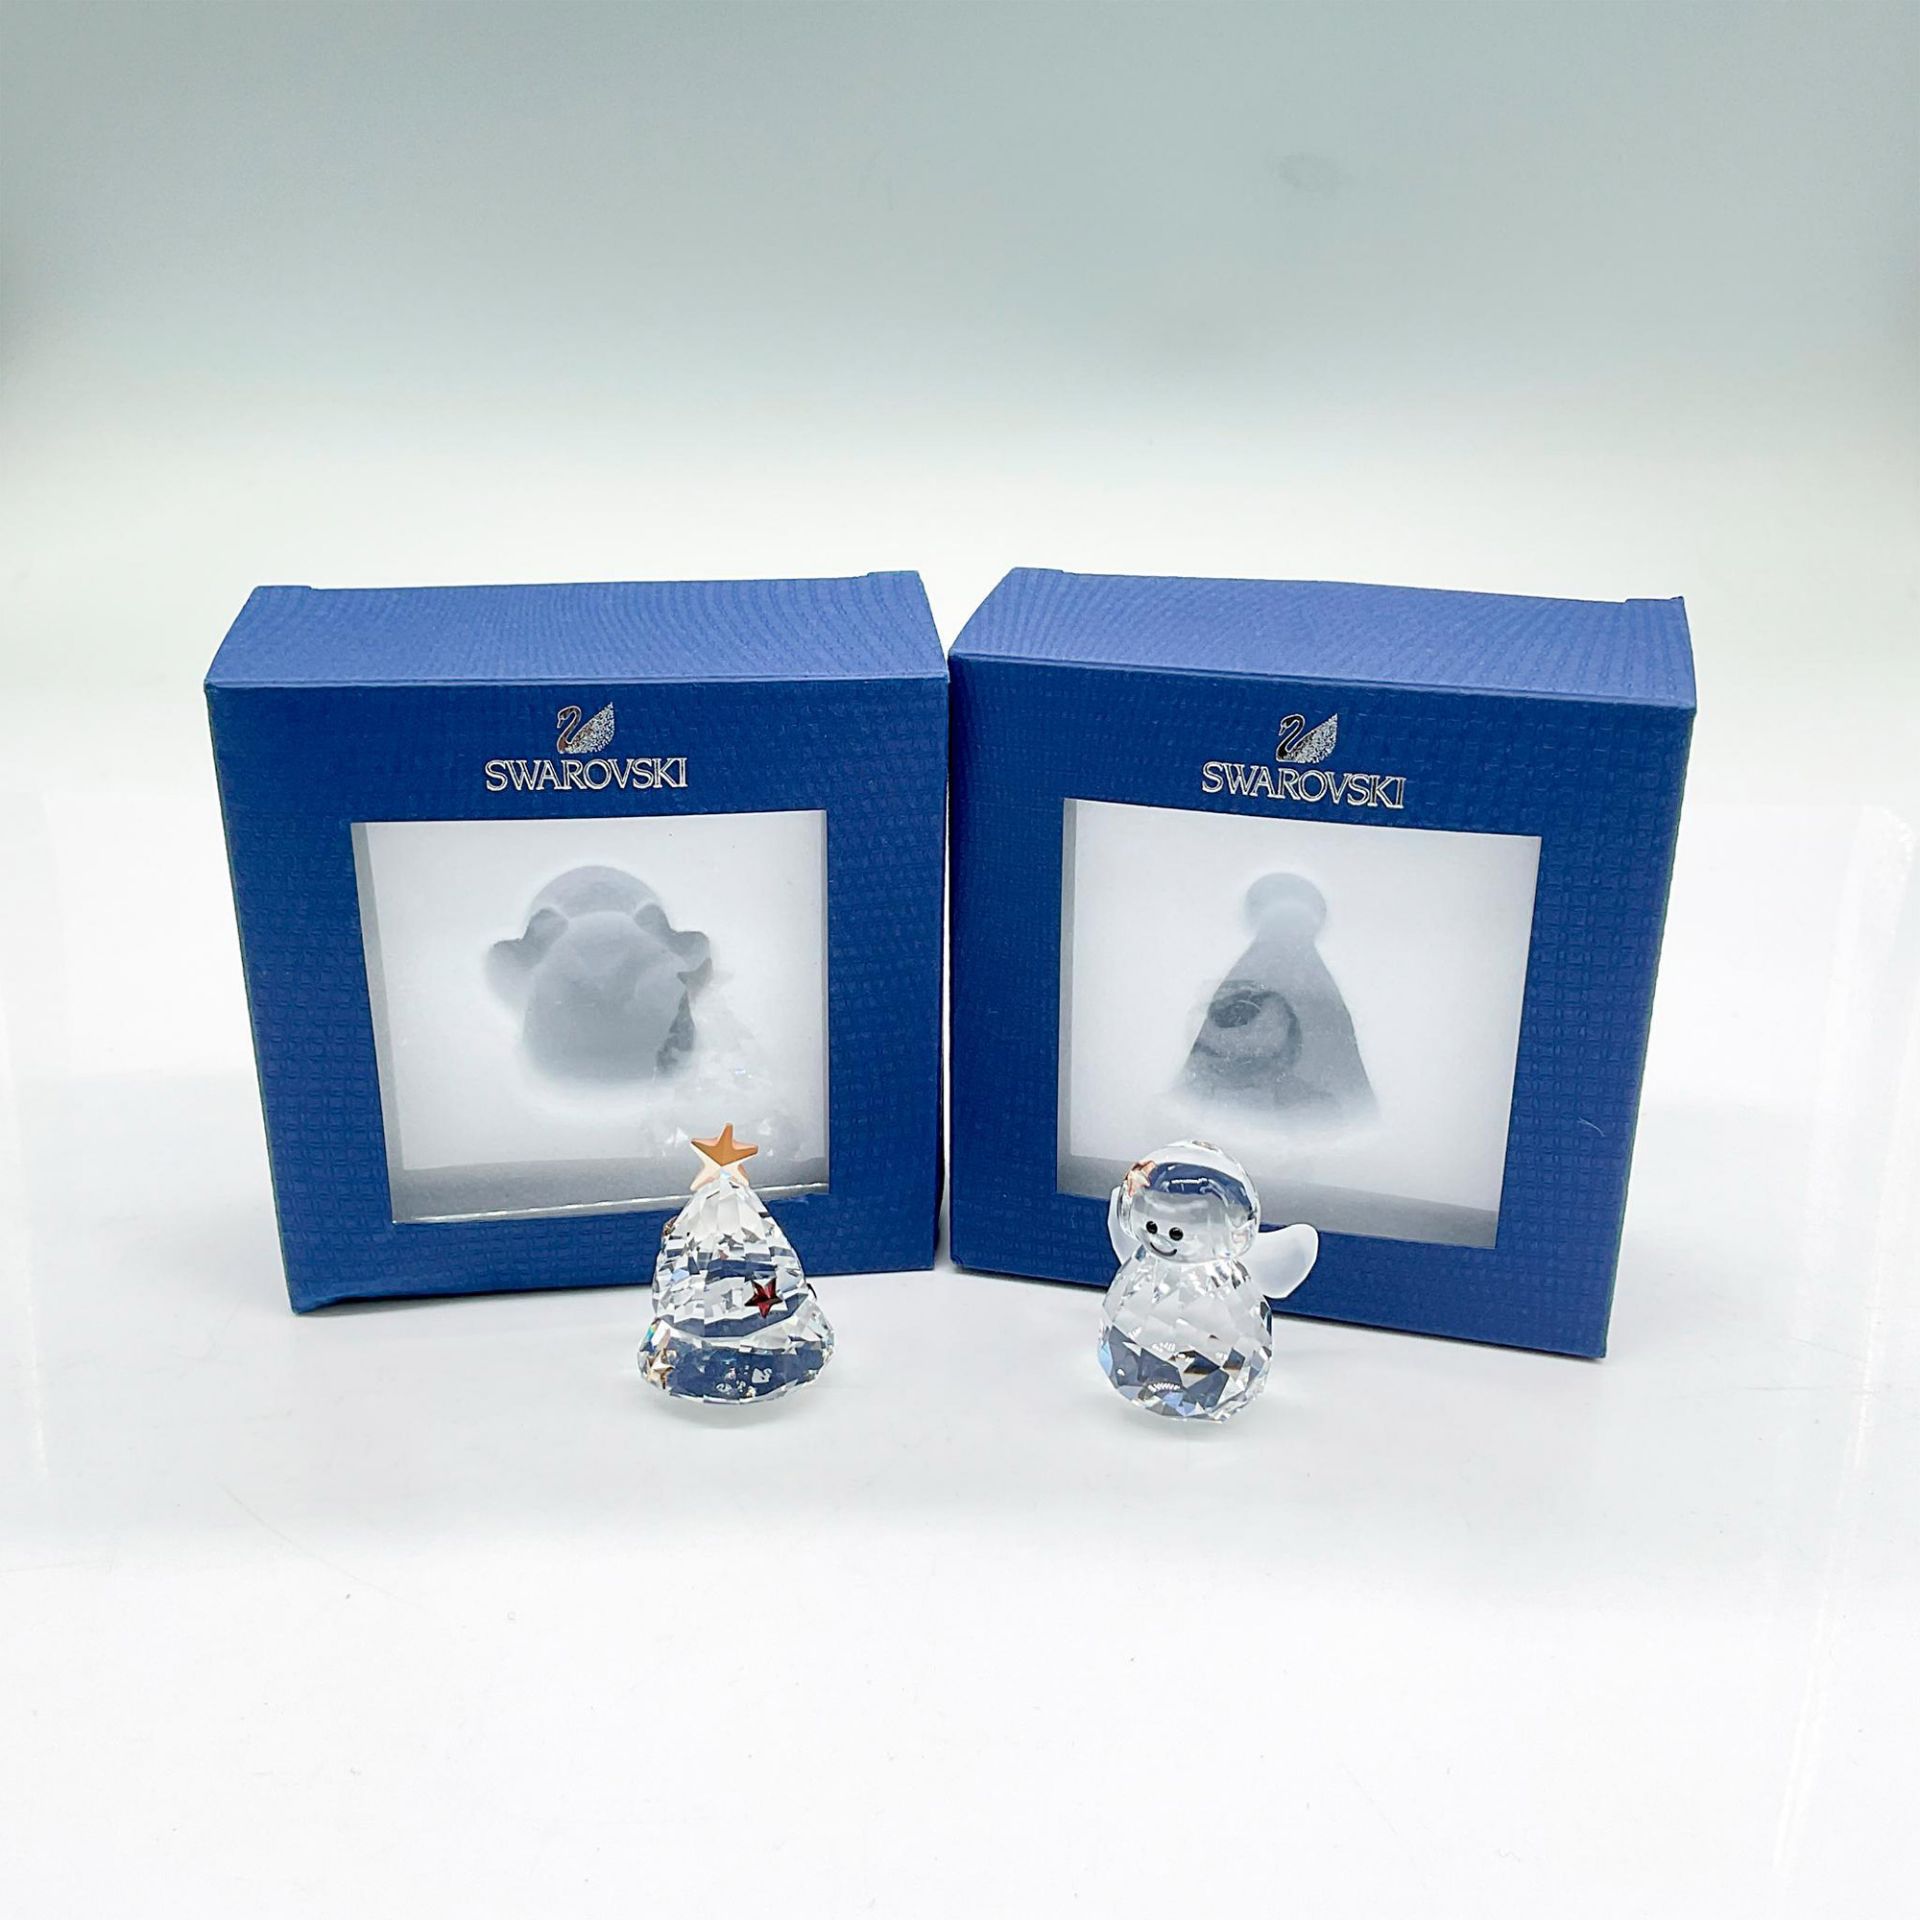 2pc Swarovski Crystal Figurines, Christmas Tree + Angel - Image 4 of 4